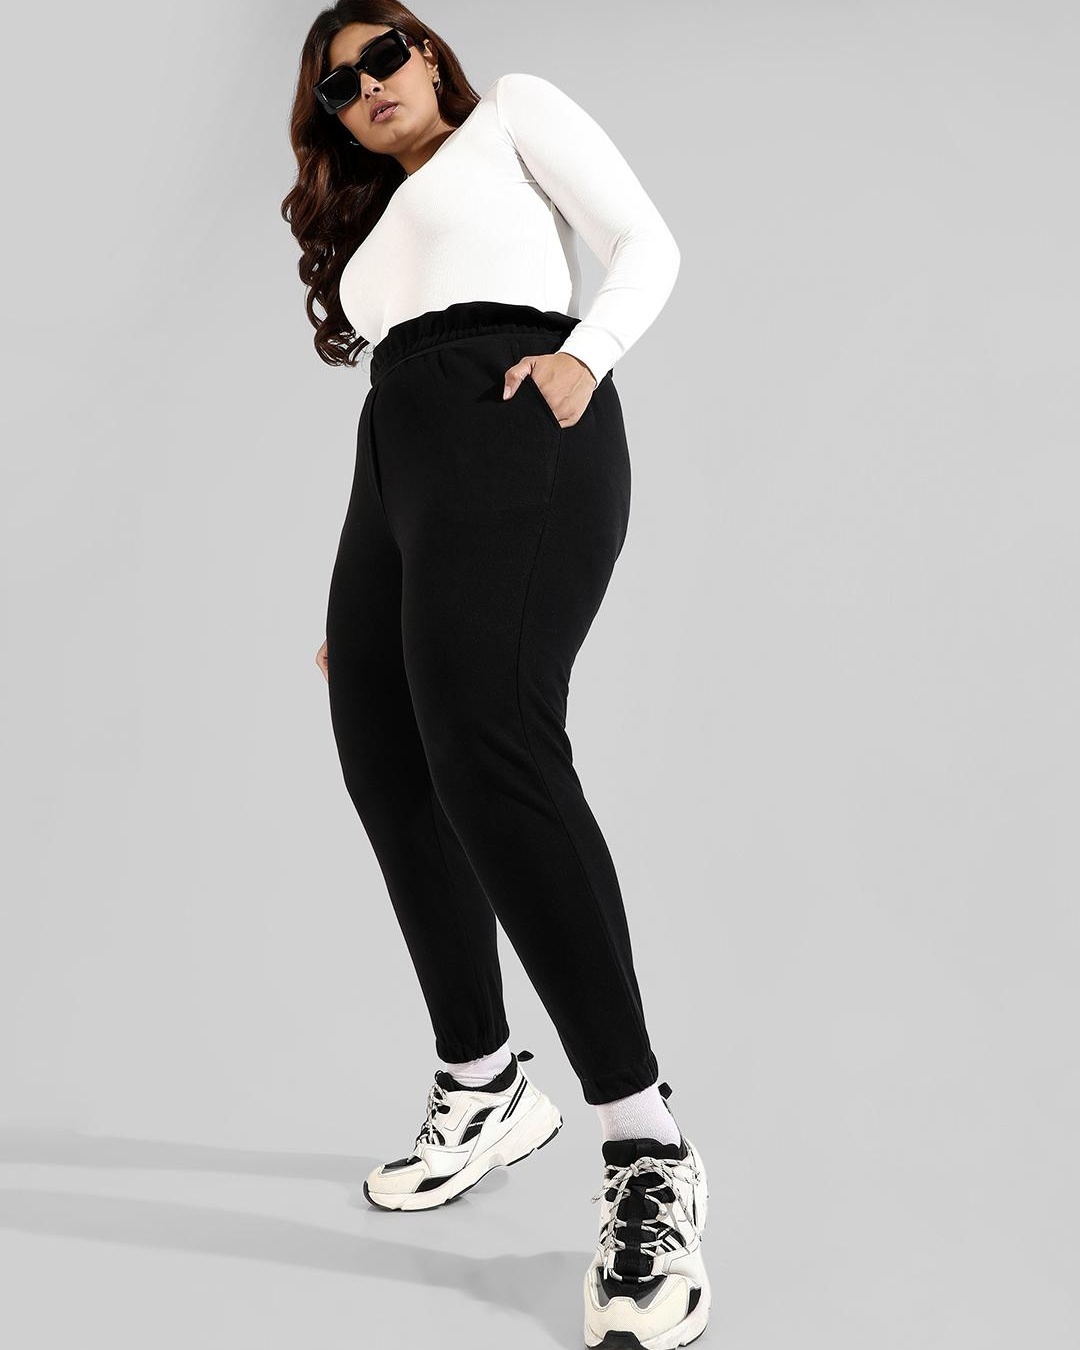 Buy Women's Black Skinny Fit Plus Size Joggers Online at Bewakoof